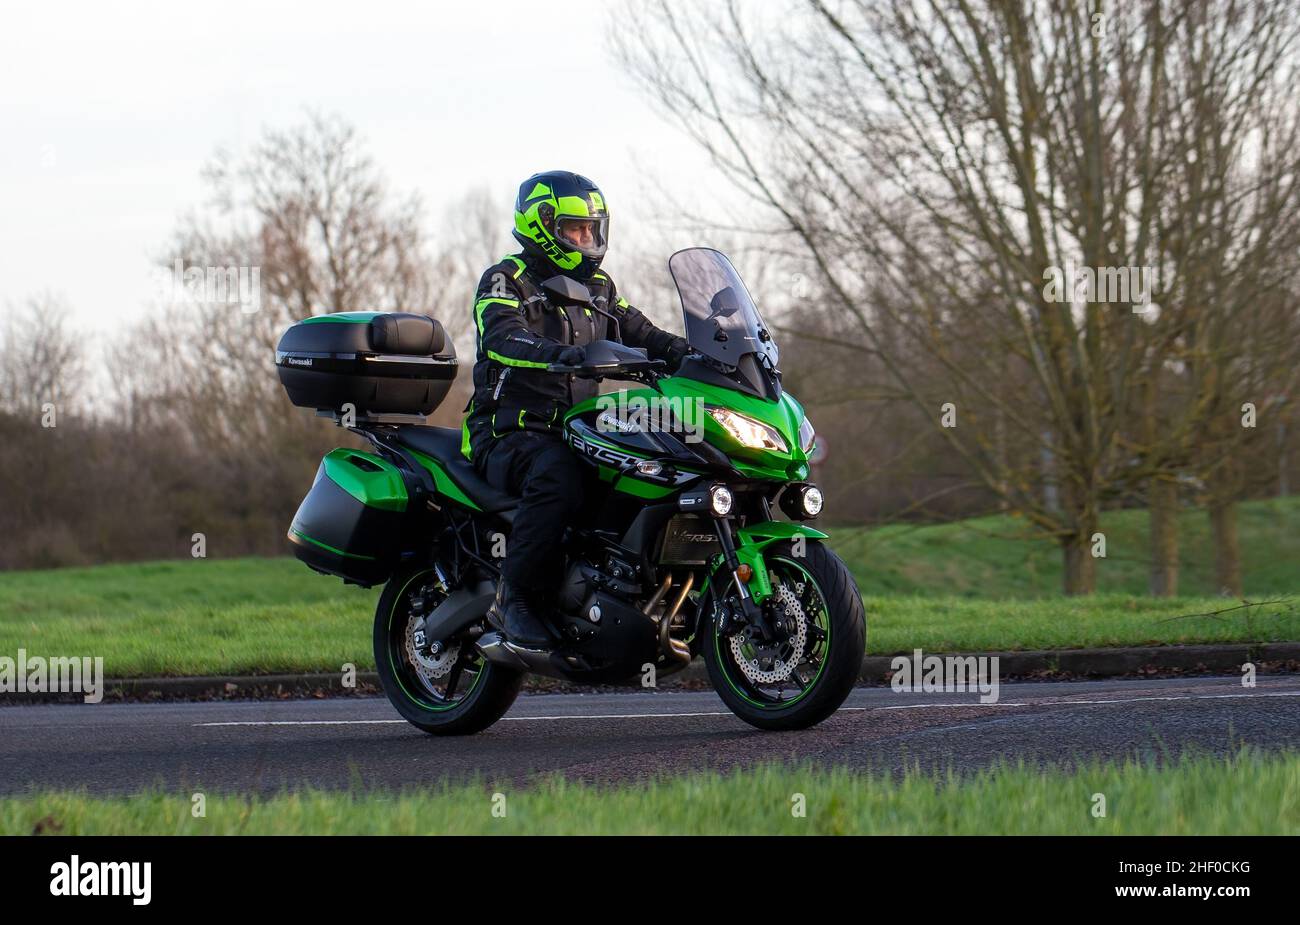 Man riding a Kawasaki Versys motorcycle Stock Photo